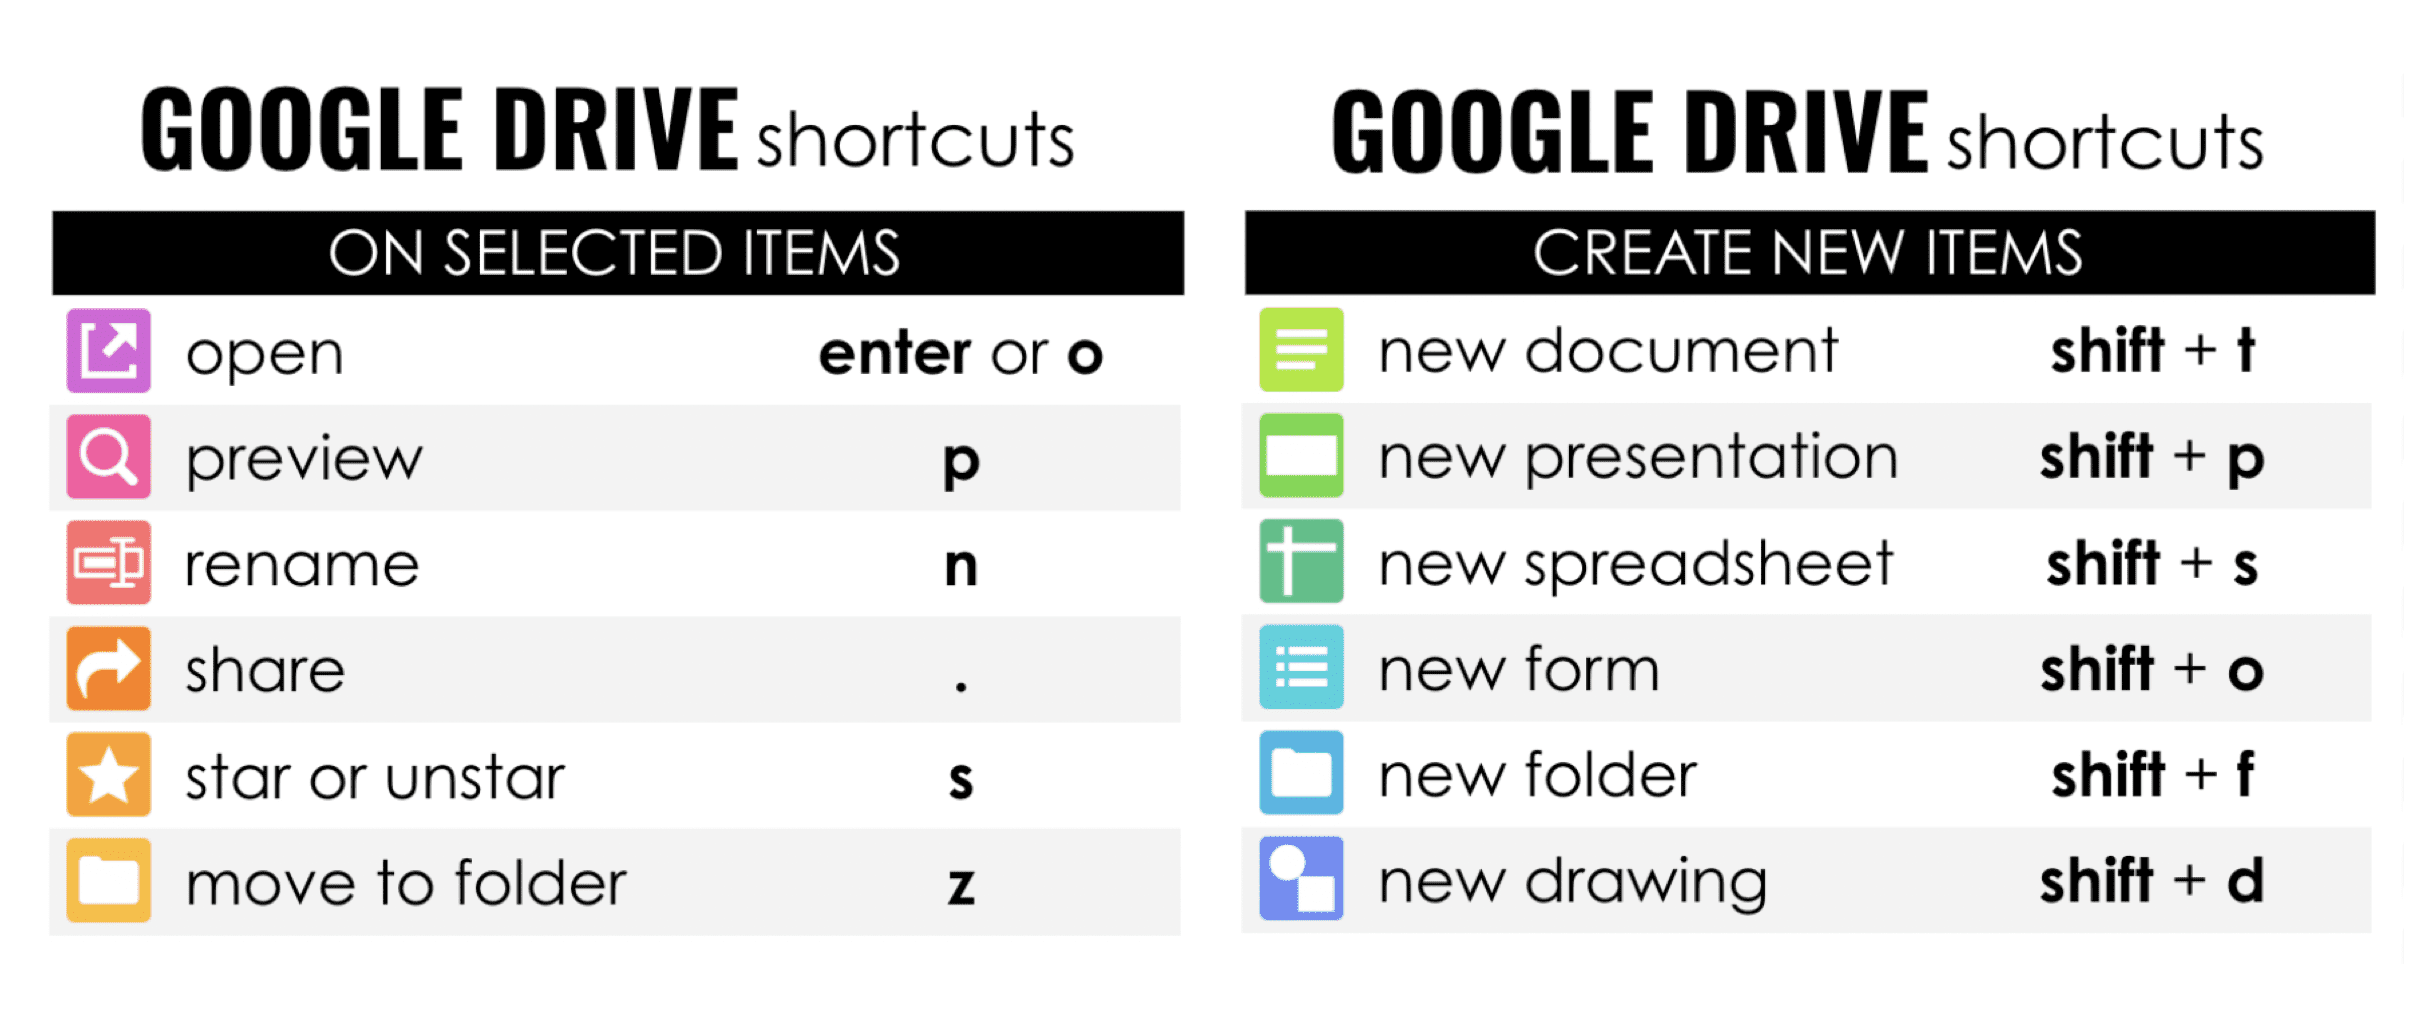 google drive shortcuts at a glance